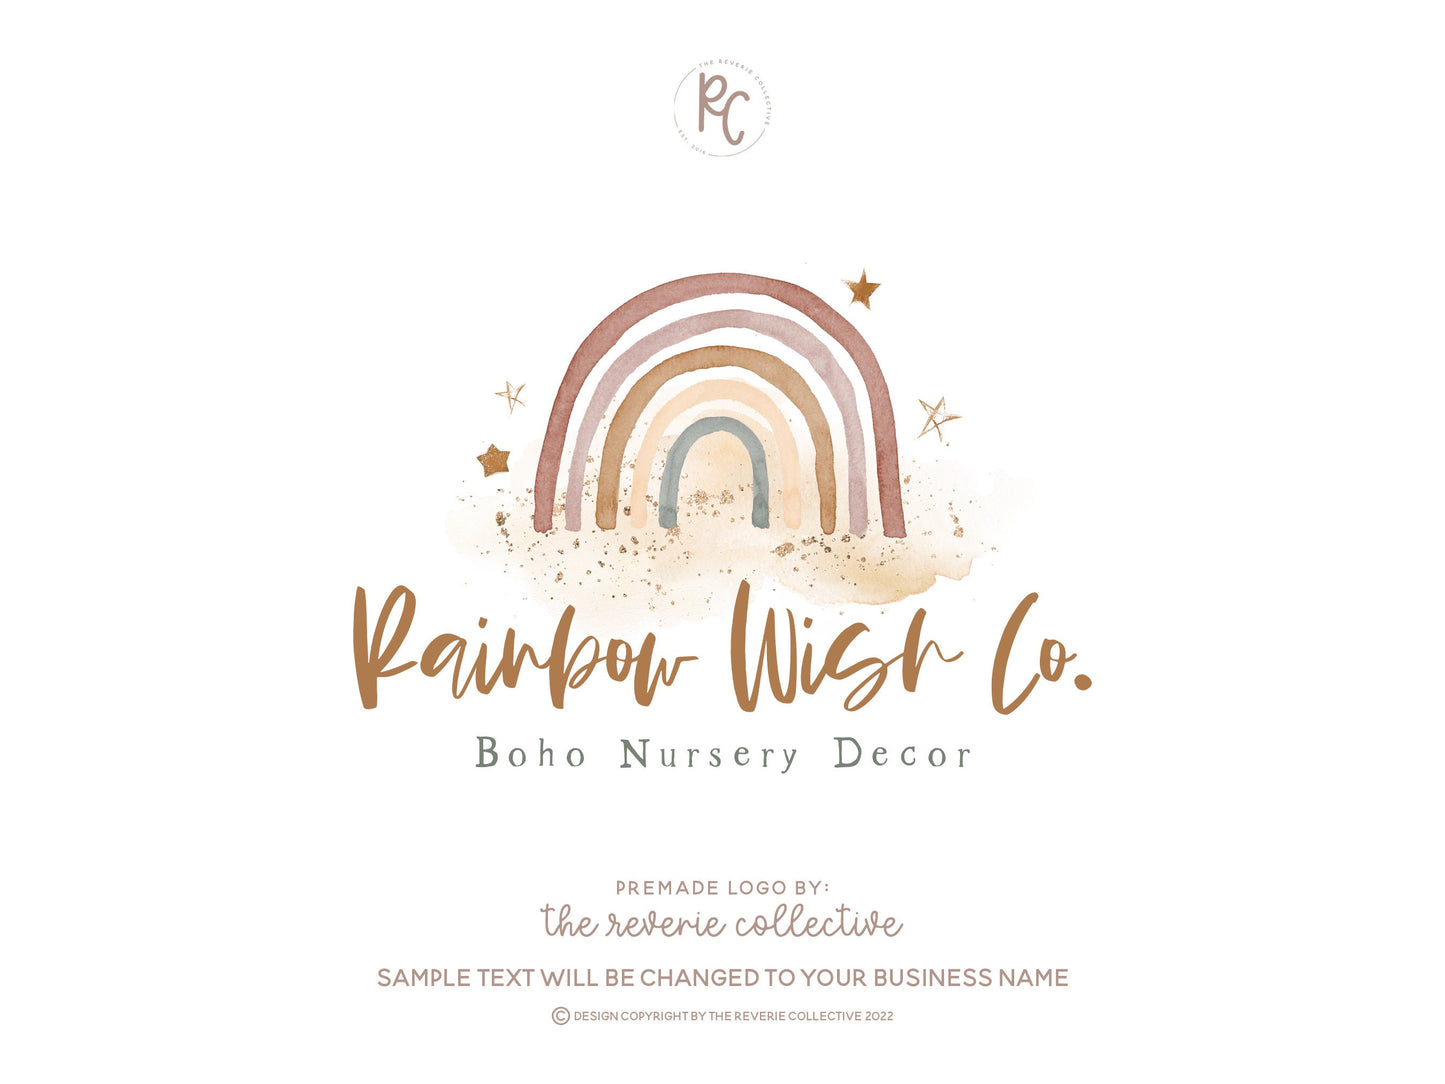 Rainbow Wish Co. | Premade Logo Design | Bohemian, Newborn, Boho, Cloud, Baby